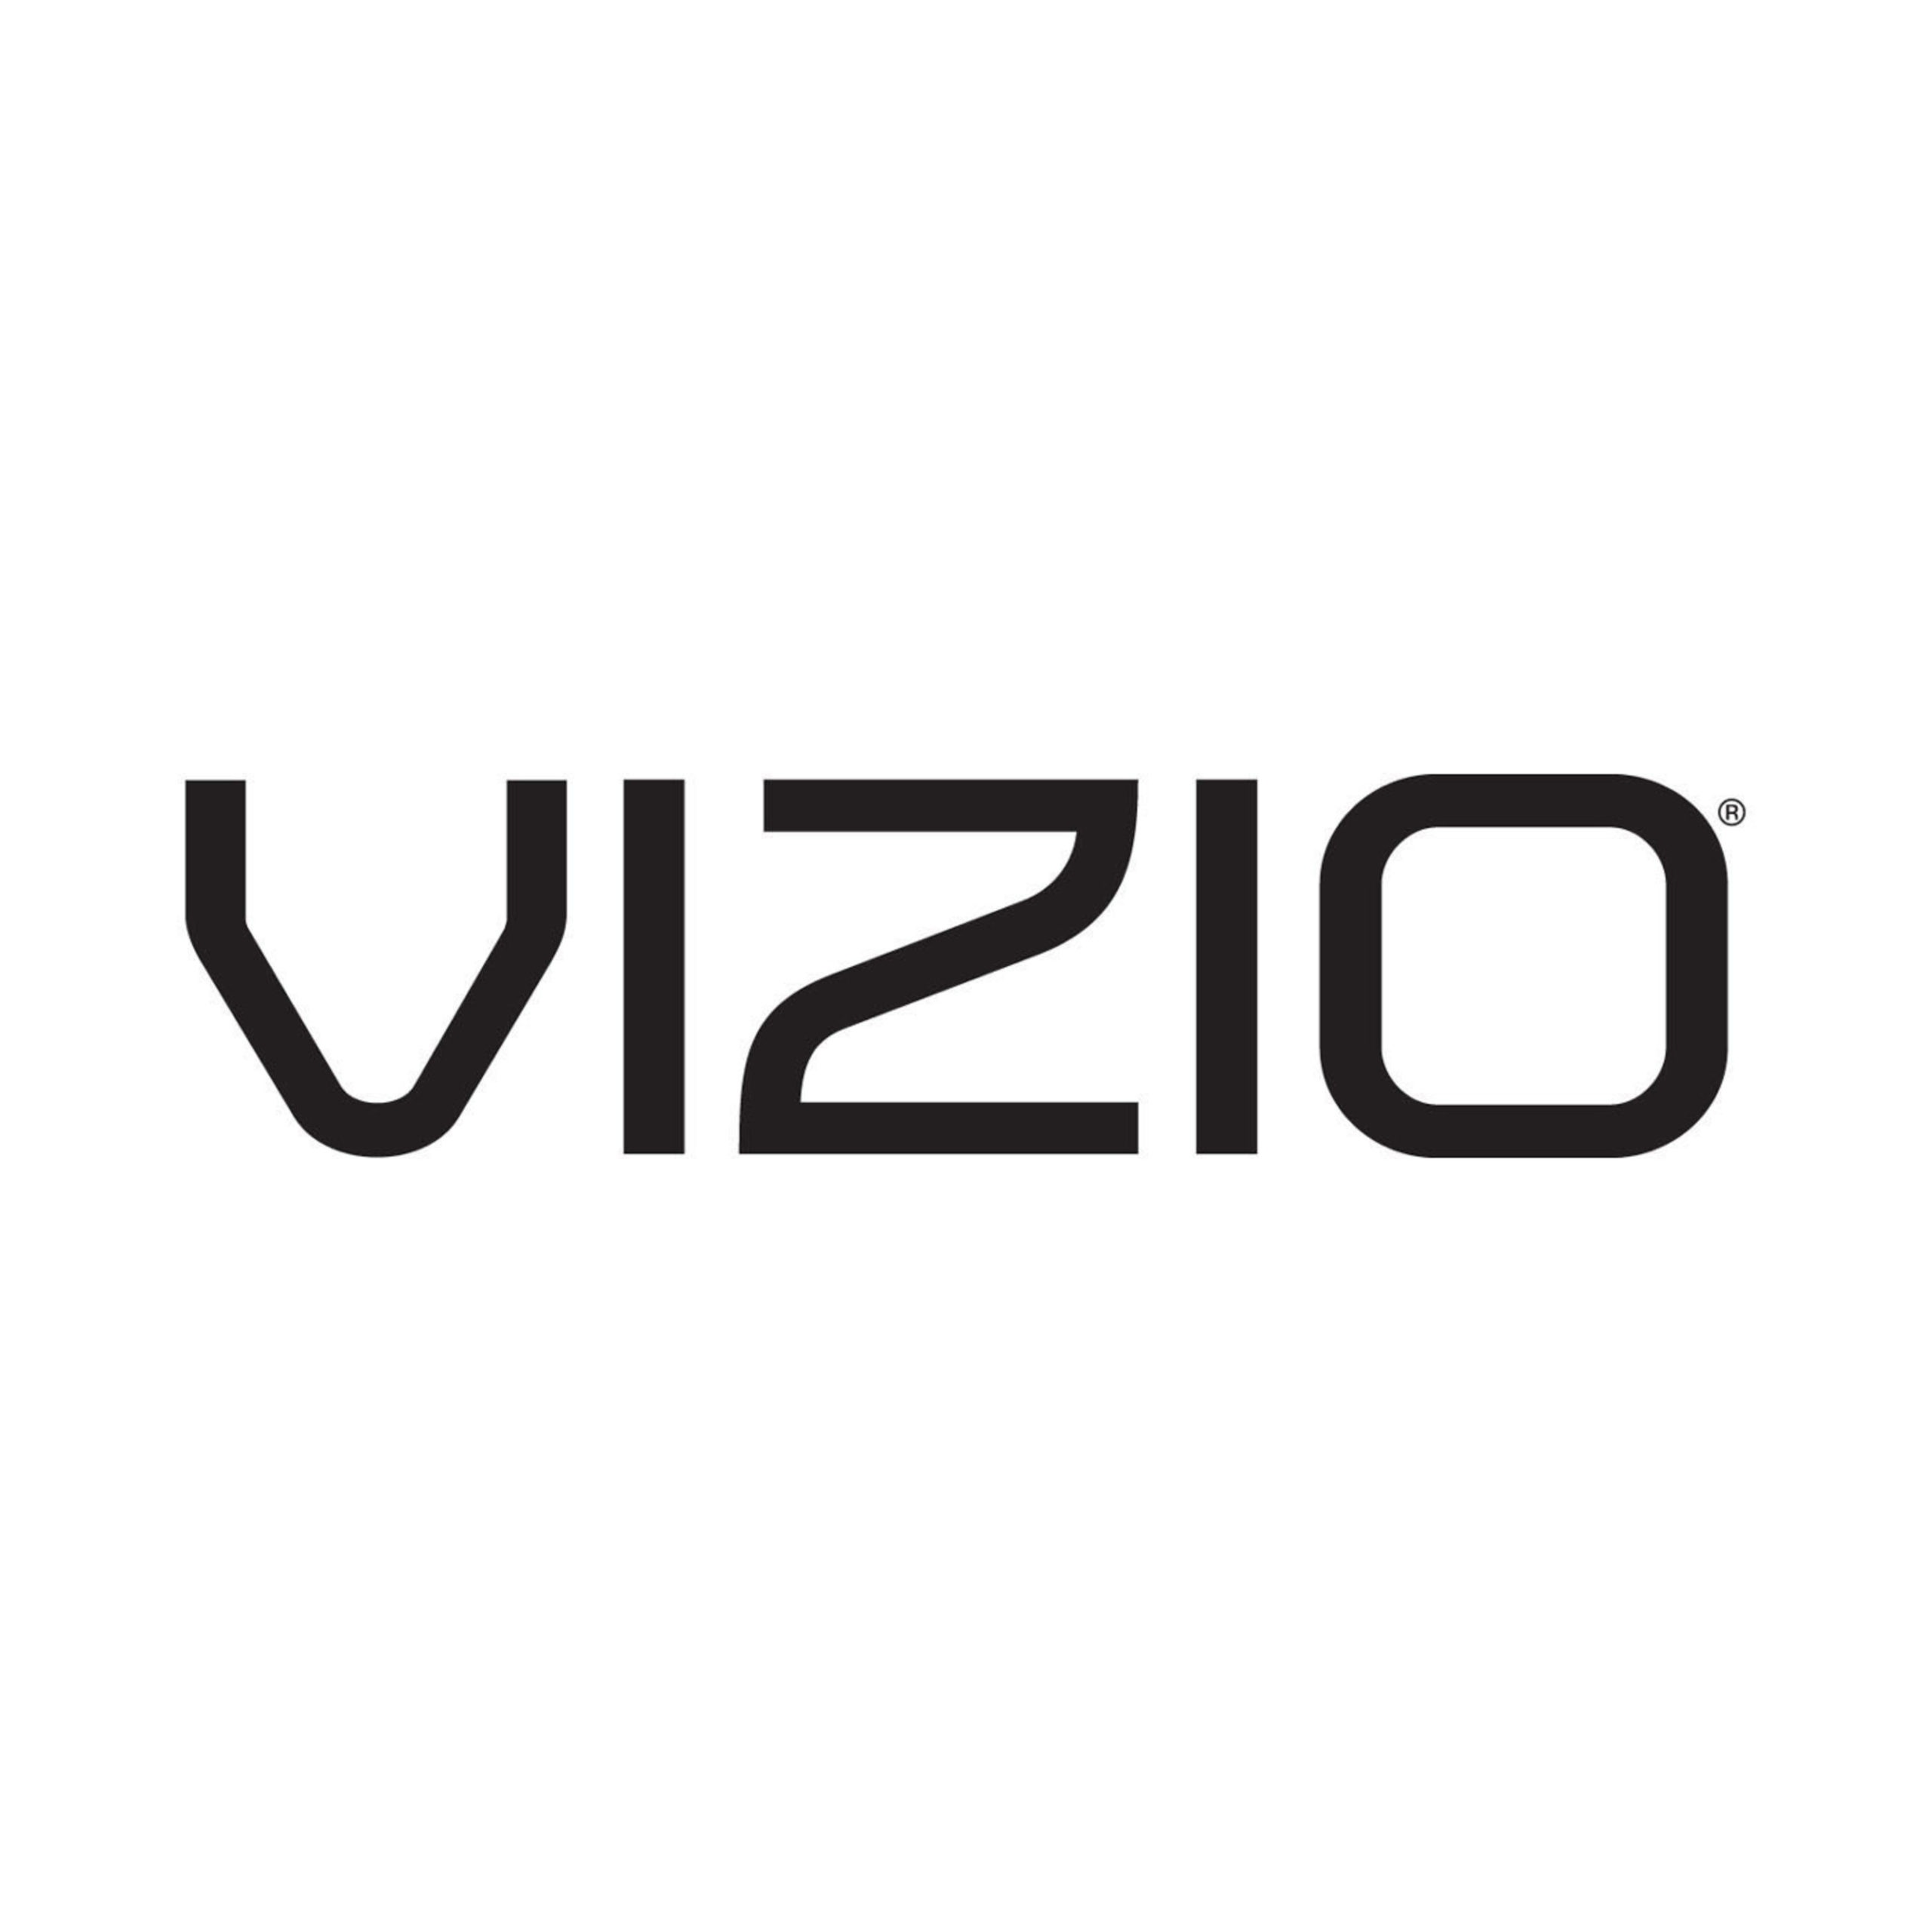 VIZIO Transforms 4K, Full HD, HD TV Lineup, Adds 86” 4K Model